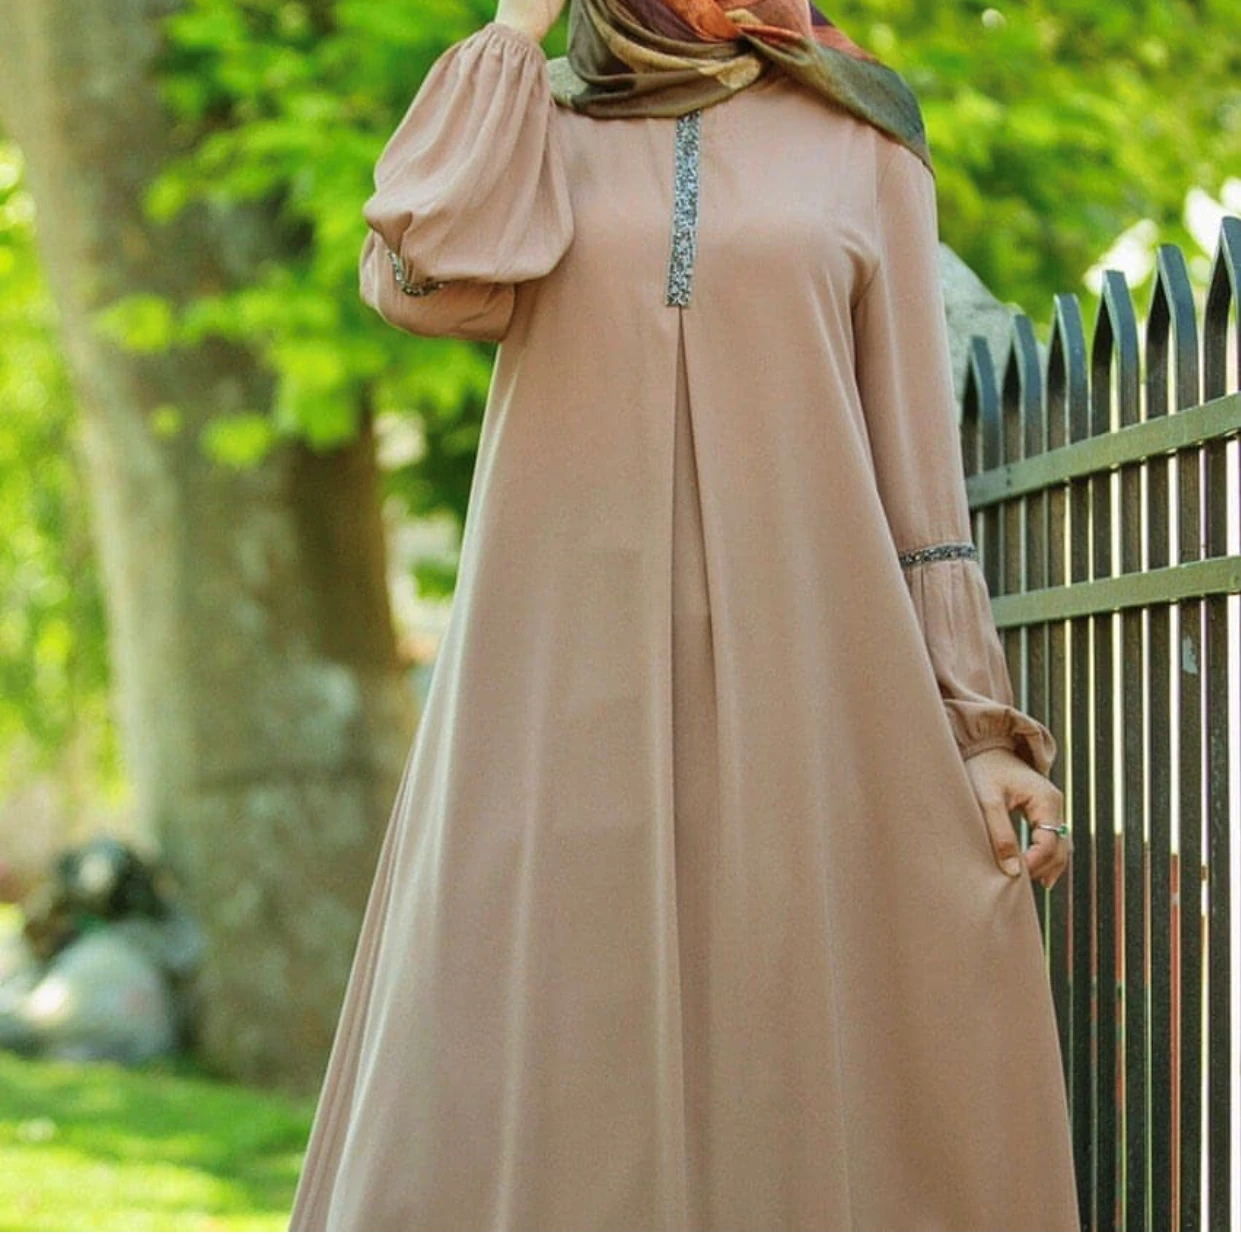 HJ BMDR0026 Women Long Muslim Robe Dress Dubai Islamic Clothing Arabia Long Sleeve